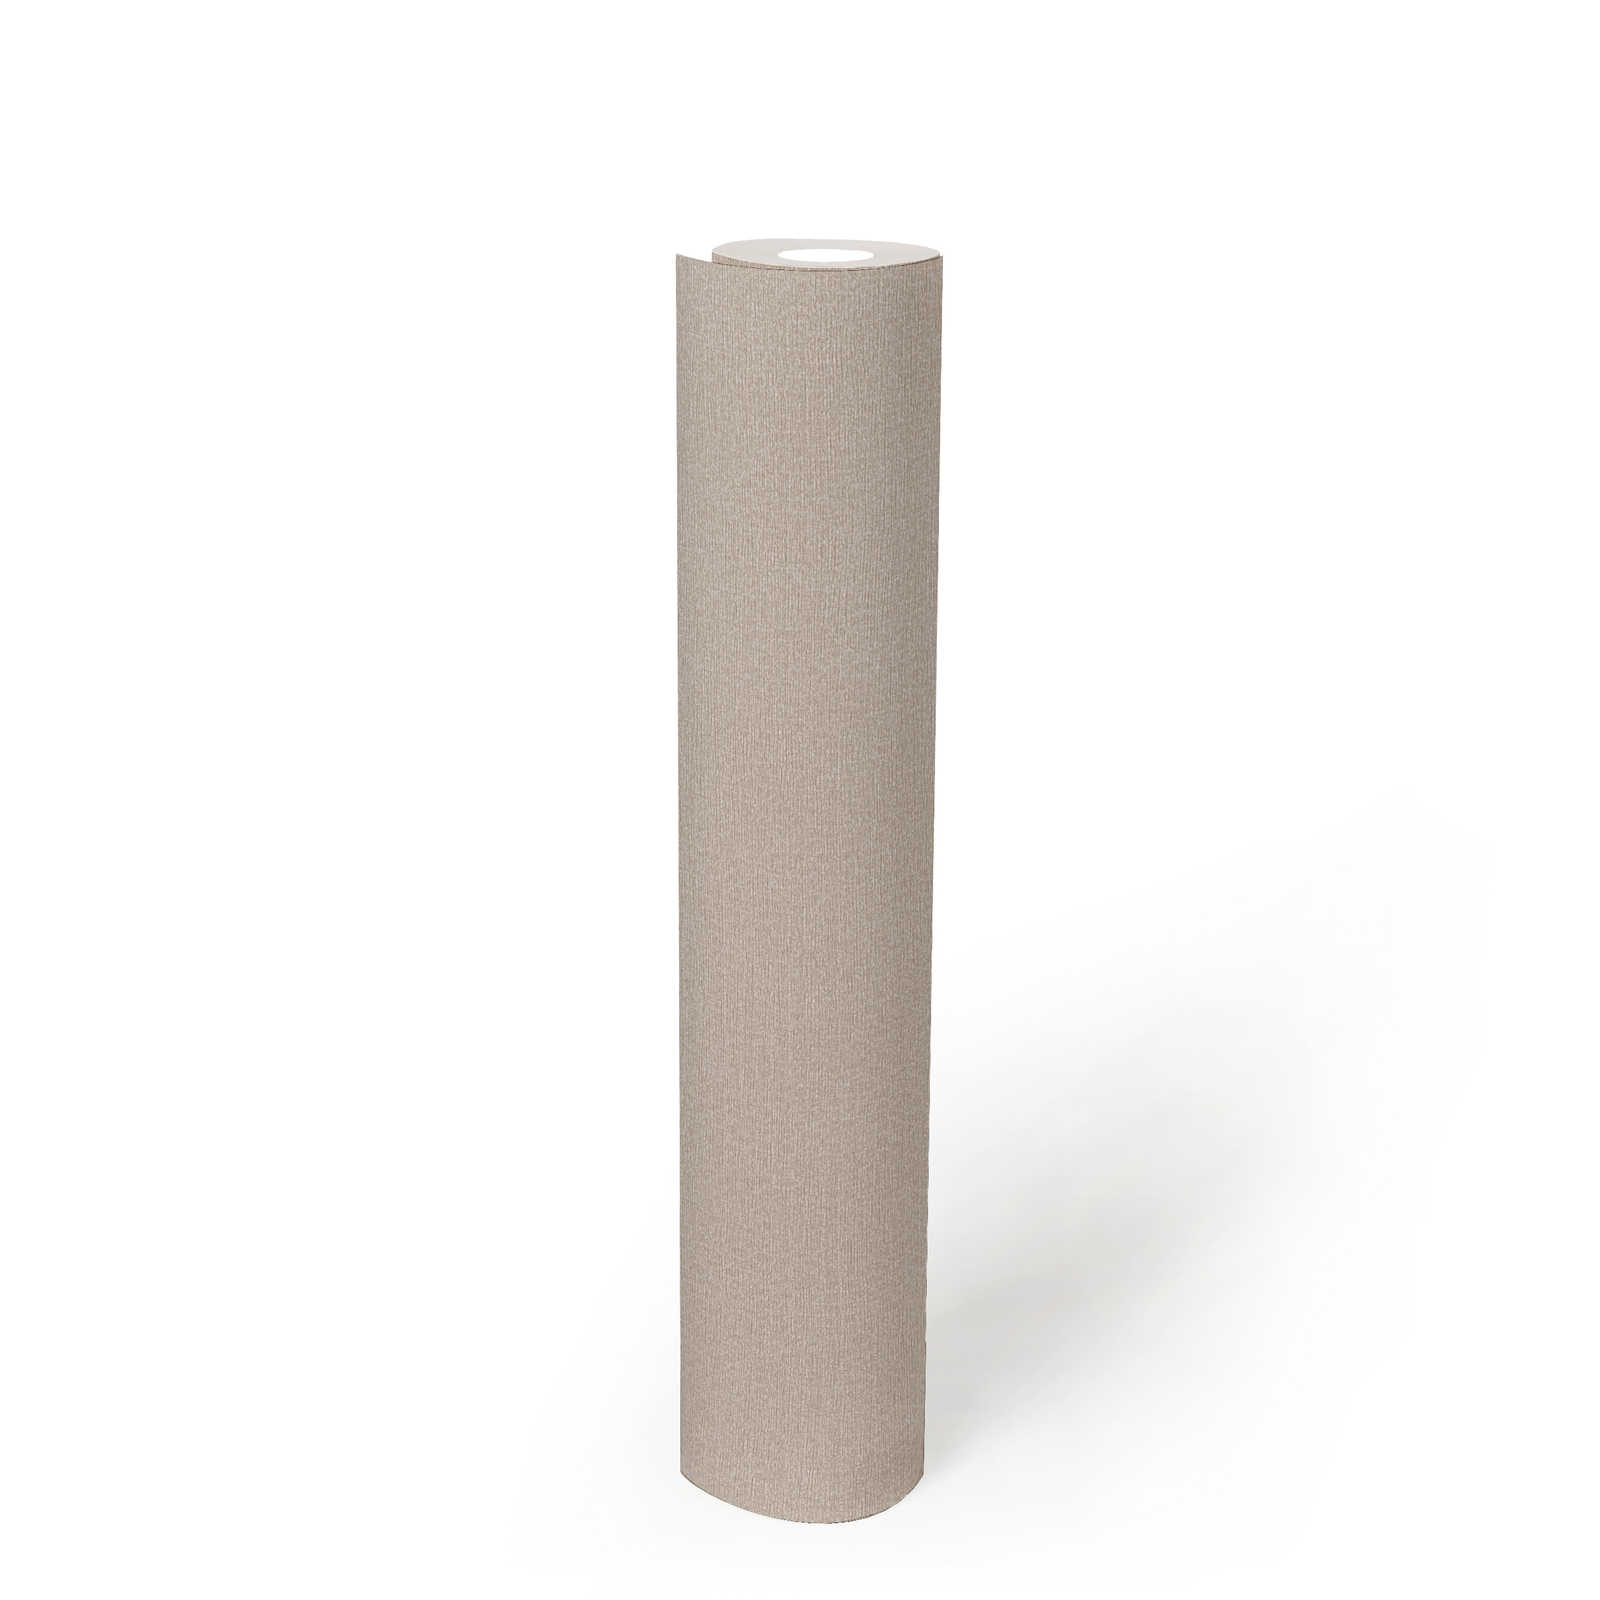             Vliestapete mit Tupfmuster & Glanzeffekt PVC-frei – Beige, Grau
        